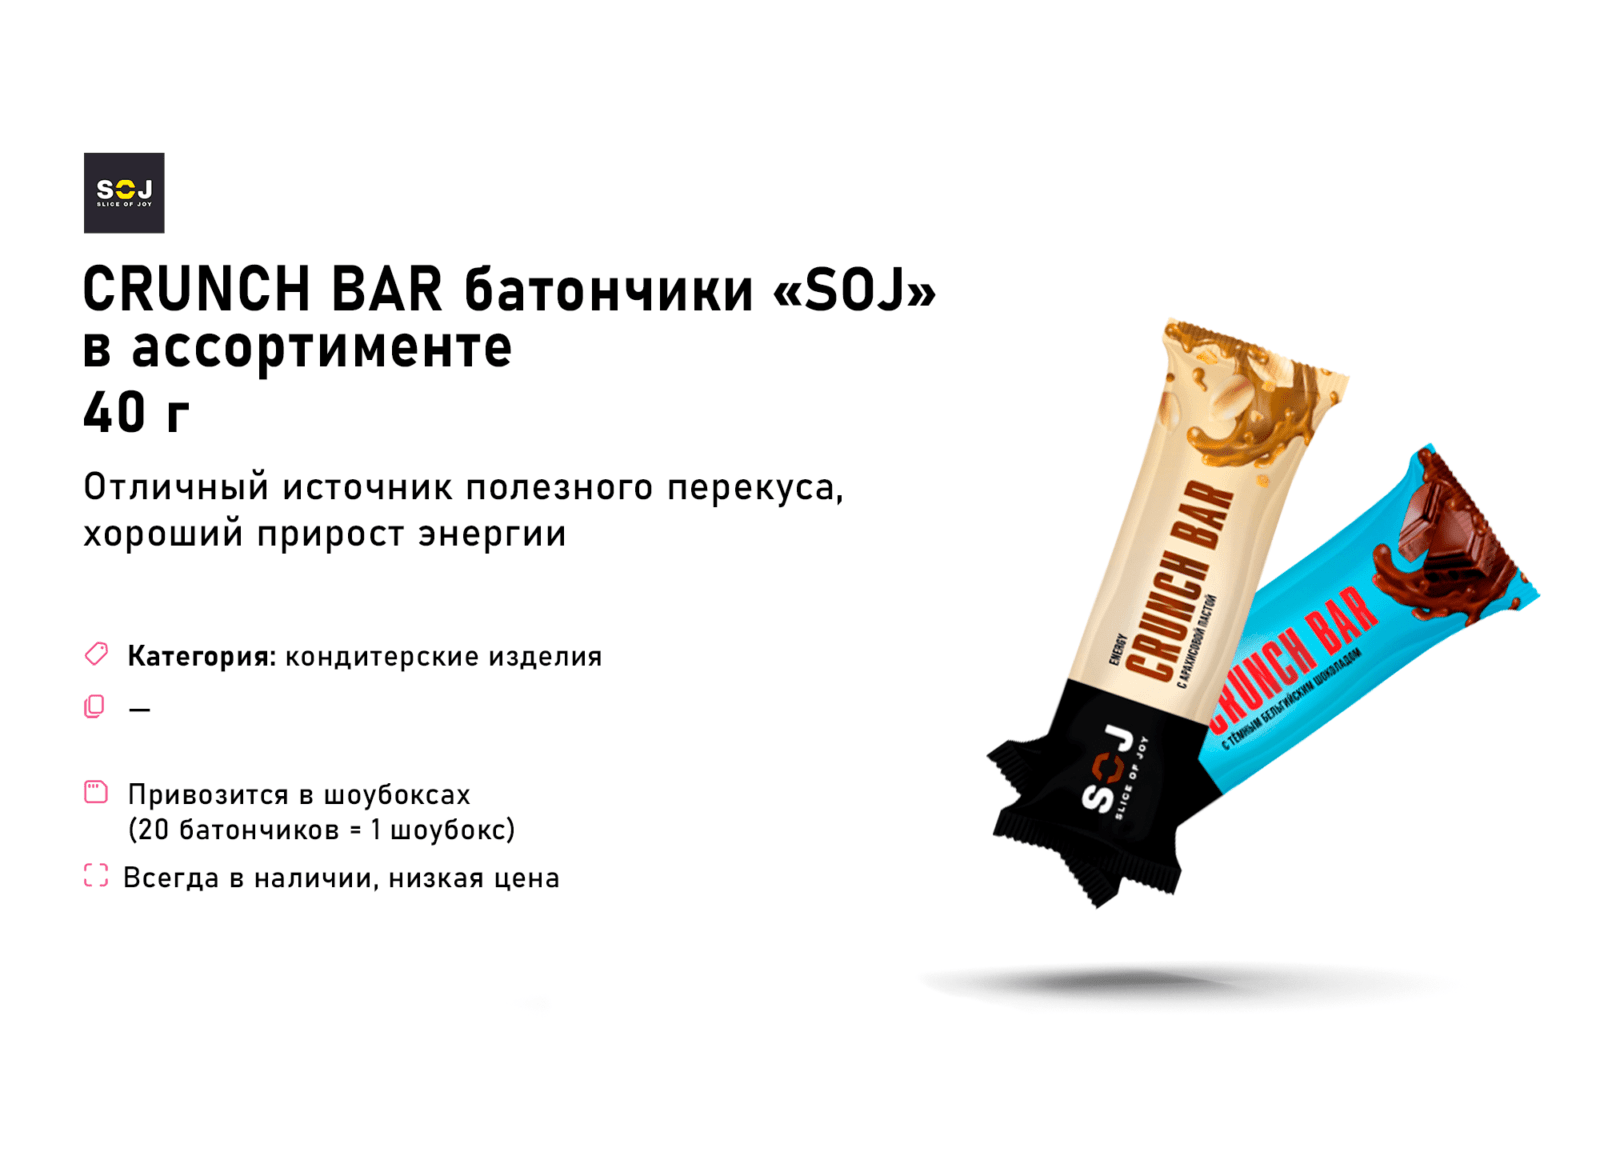 24 Crunch bar батончики SOJ